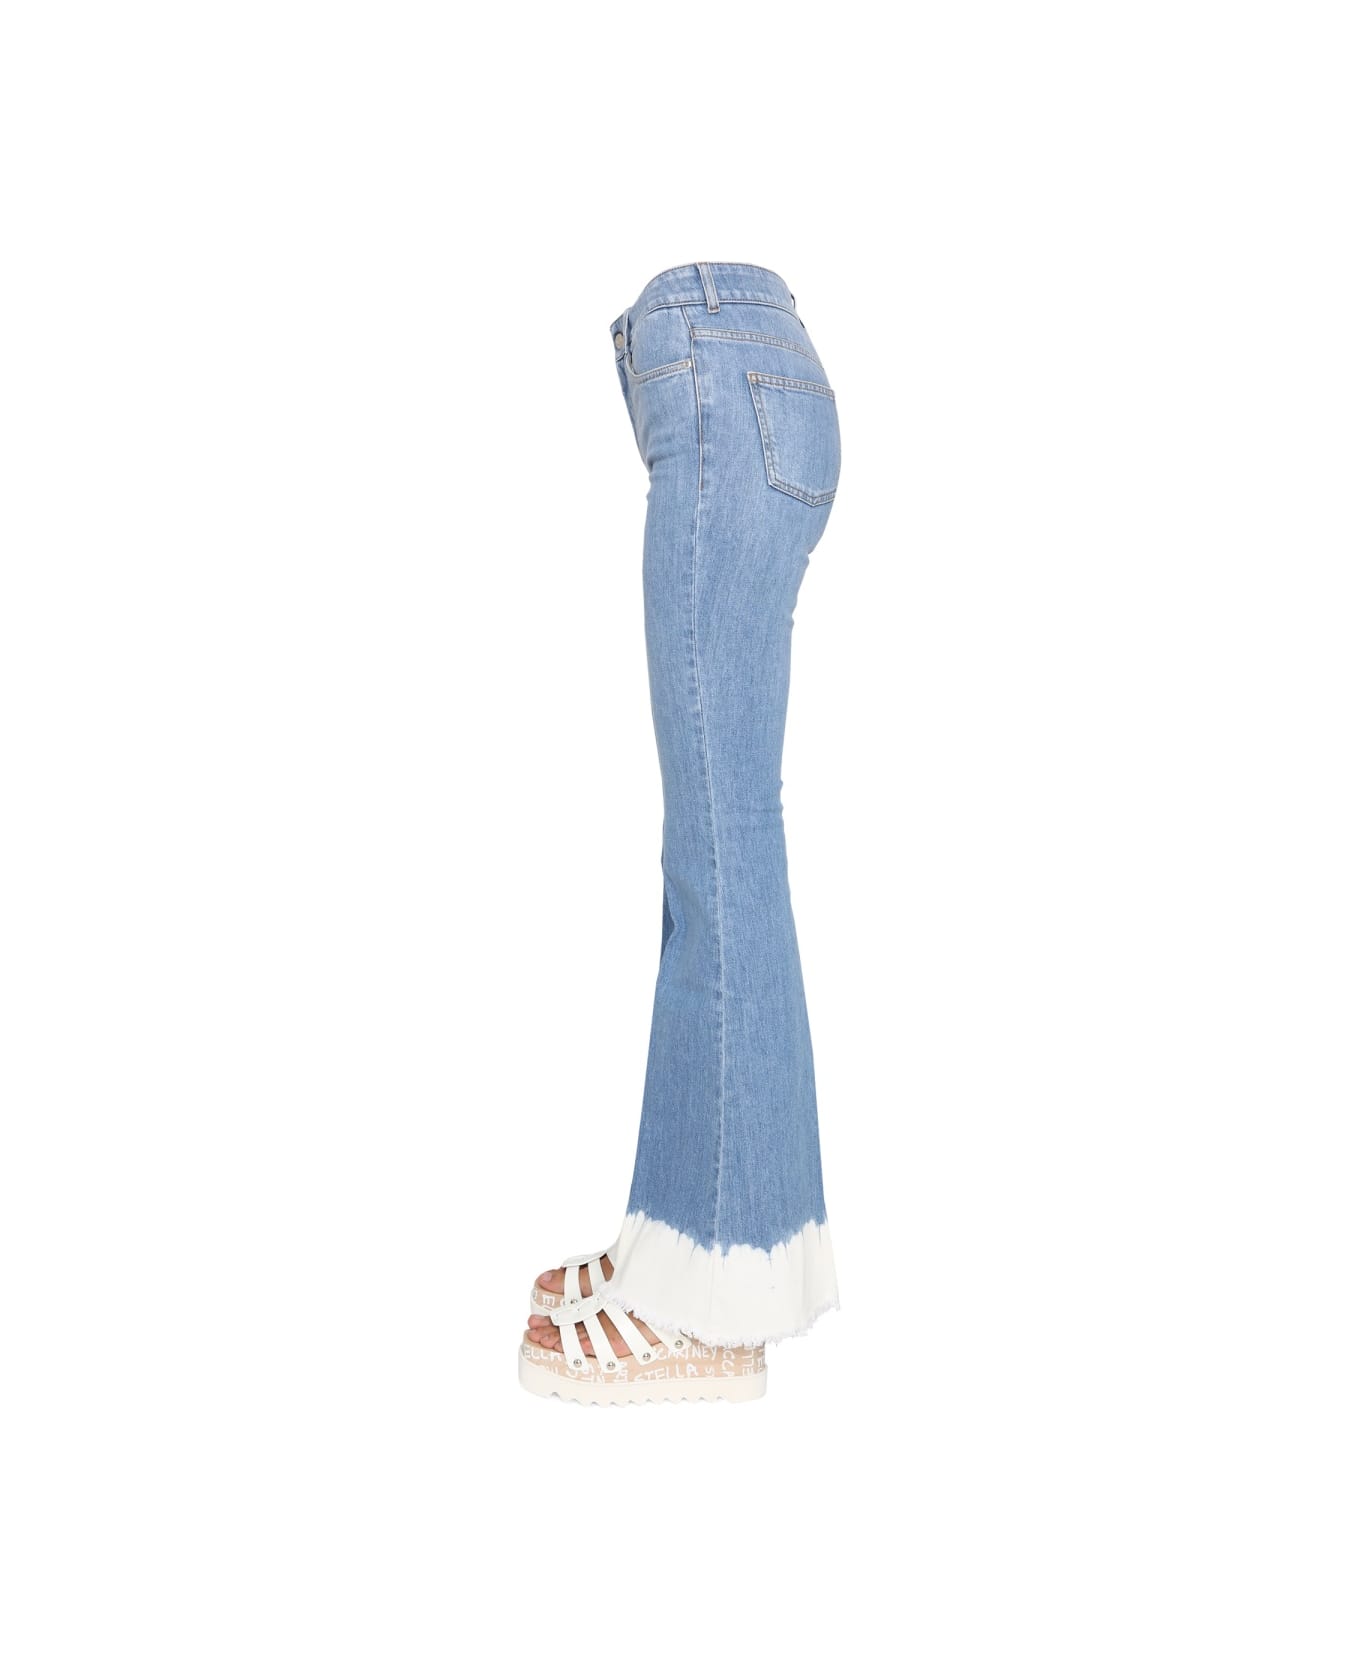 Stella McCartney 1970s Jeans - BLUE